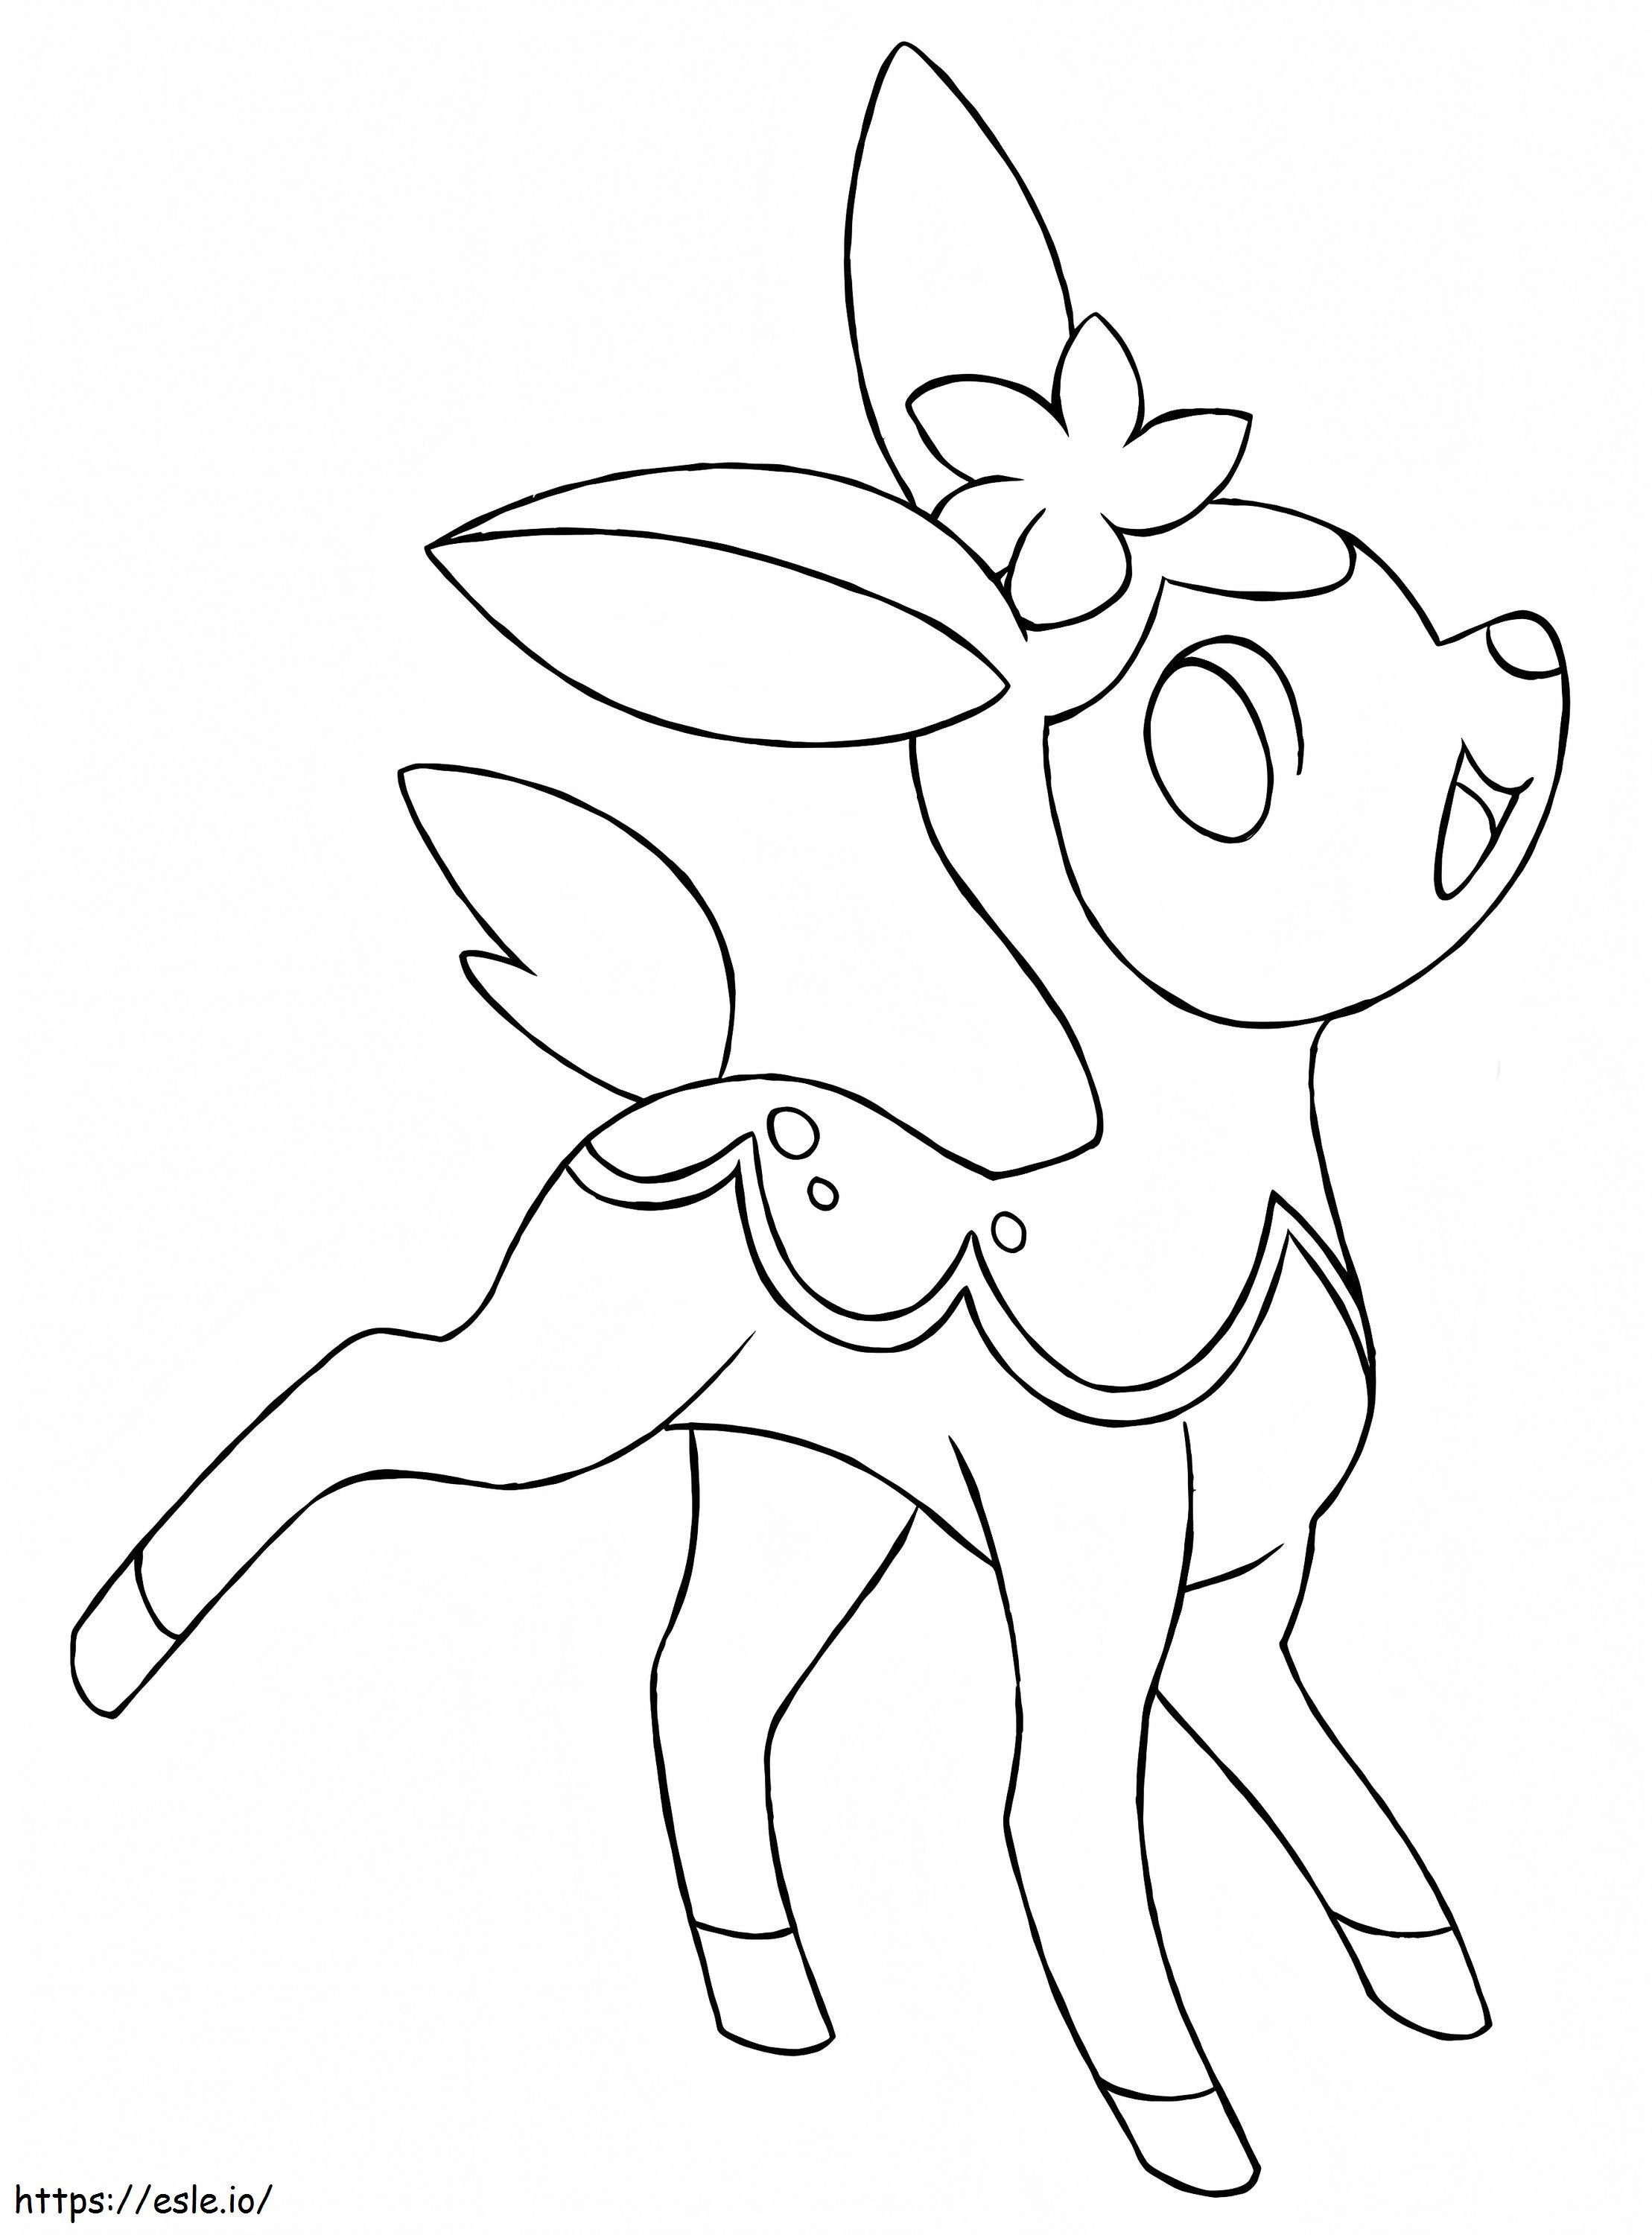 Deerling-Pokémon ausmalbilder